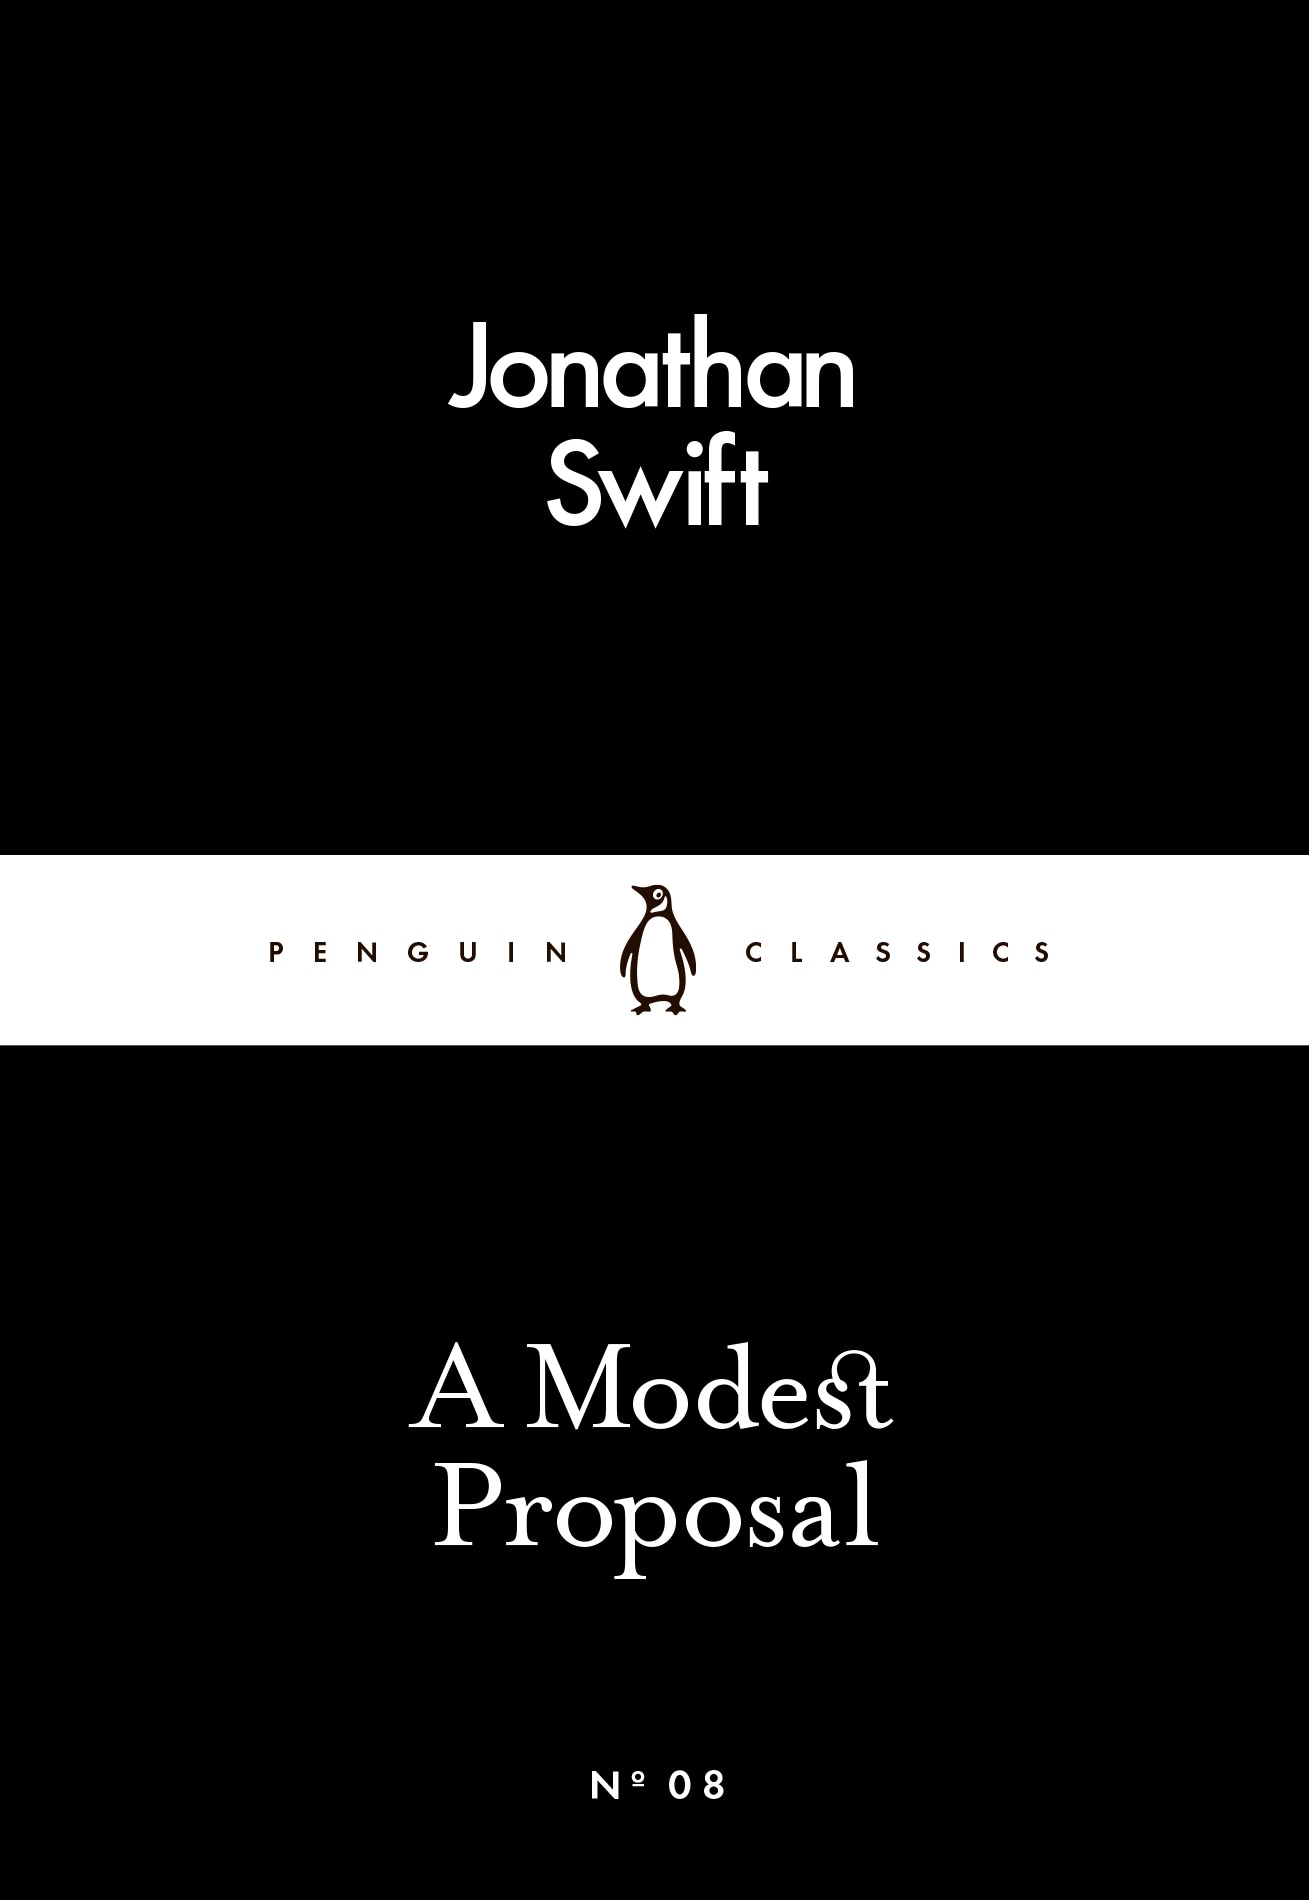 Book “A Modest Proposal” by Jonathan Swift — February 26, 2015